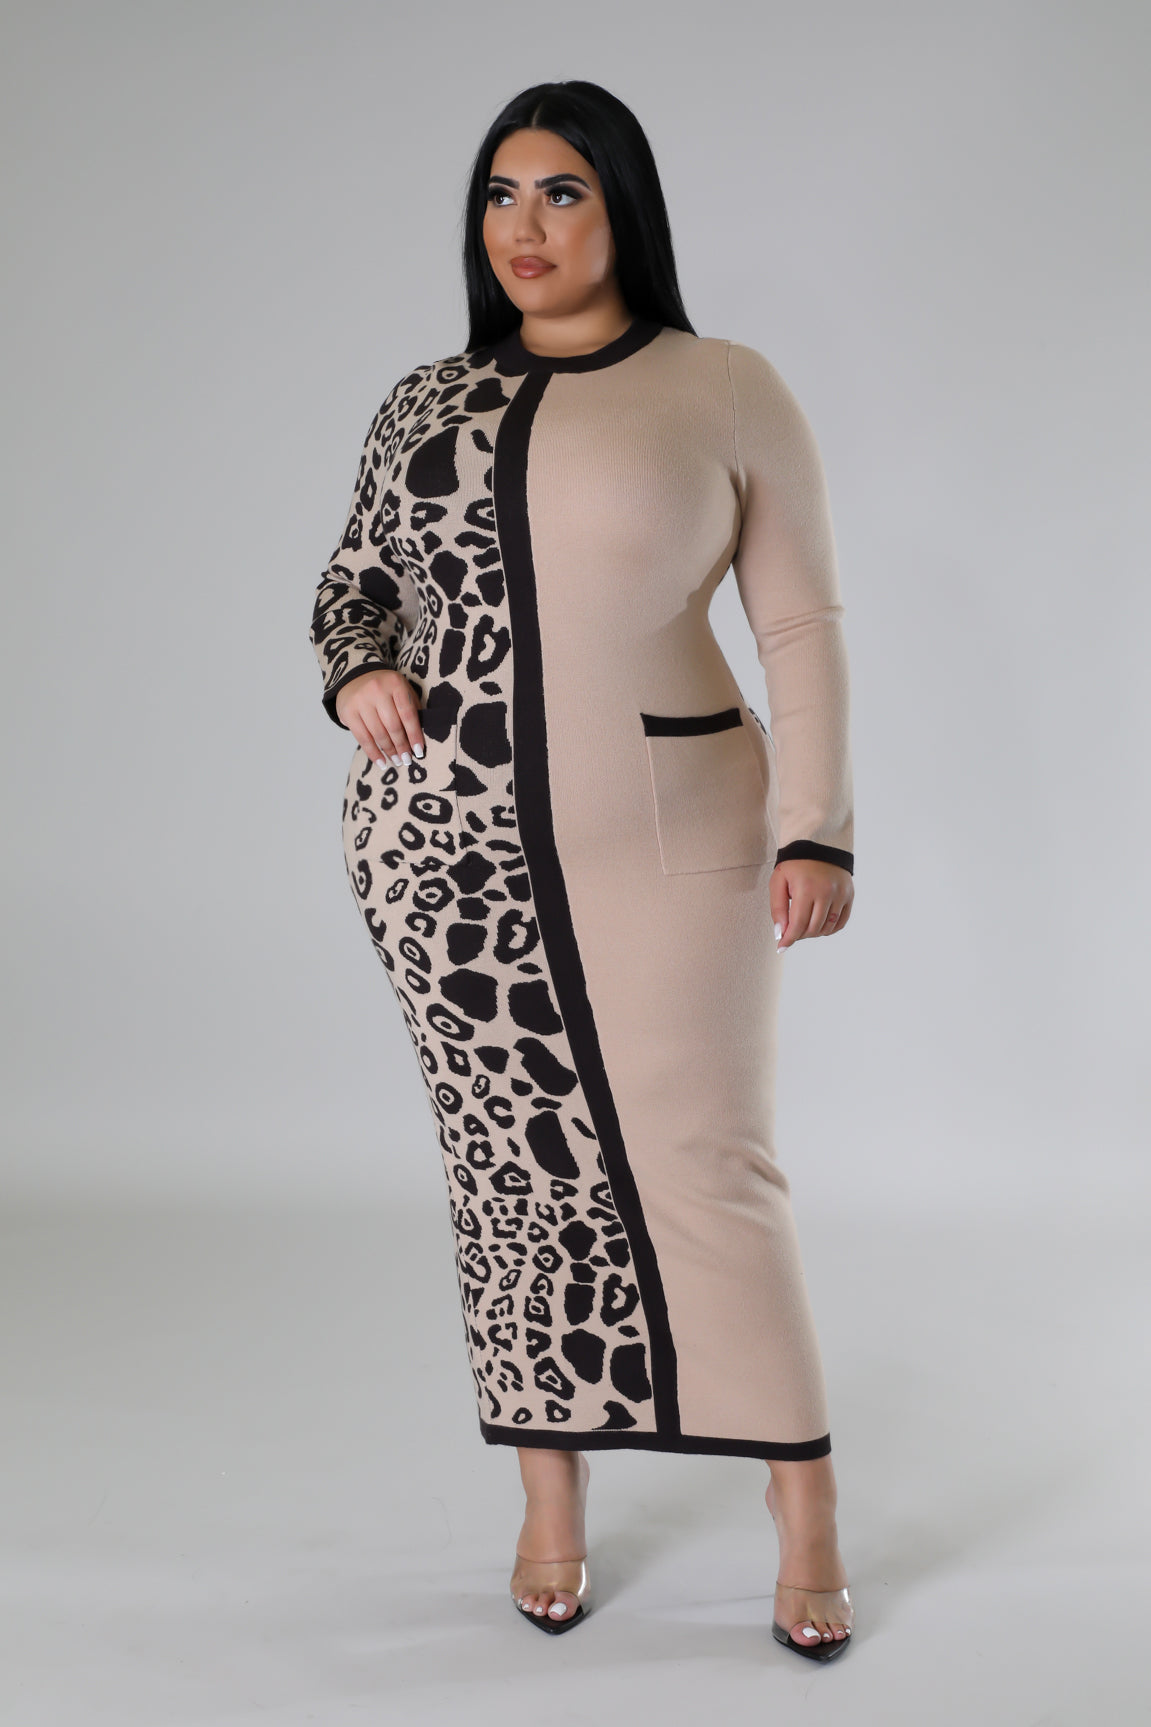 Cheetah Girl Dress